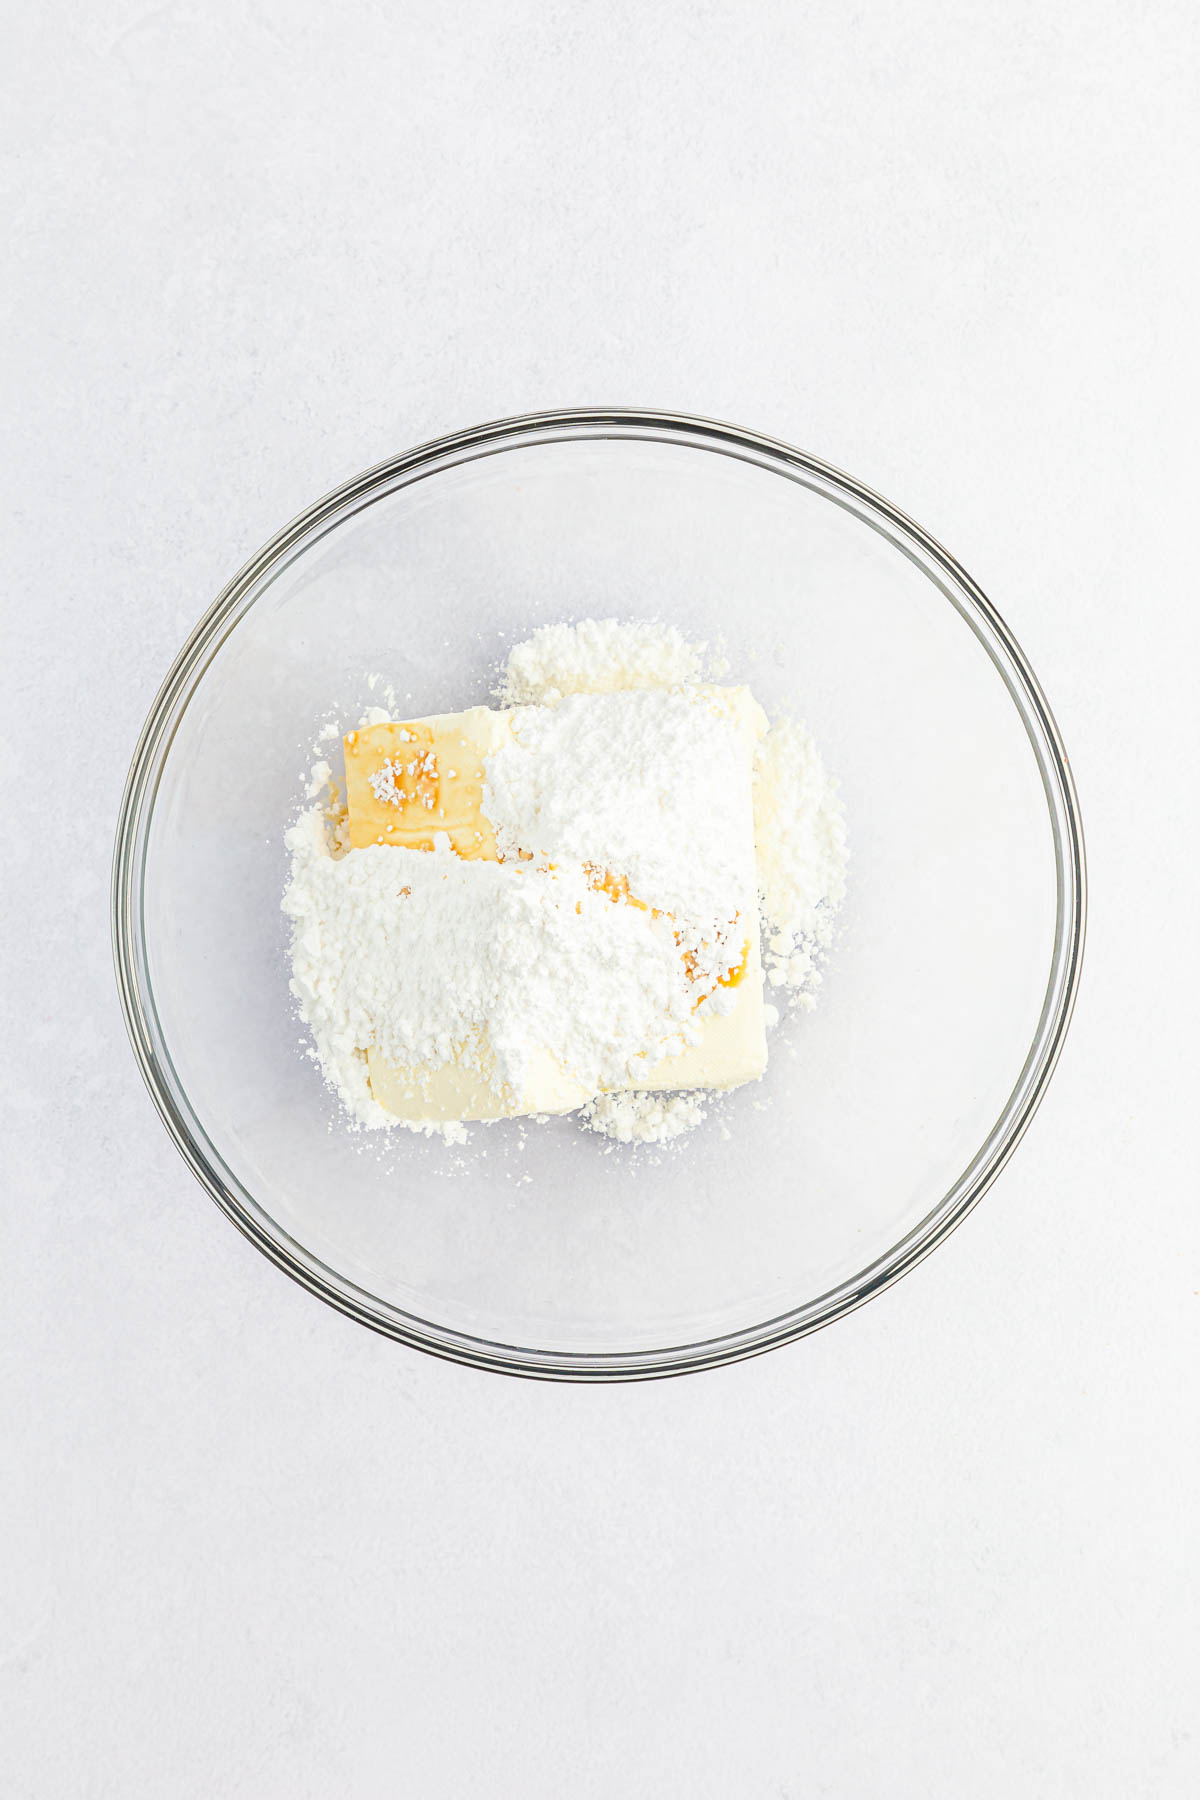 Cream cheese, powdered sugar and vanilla in bowl